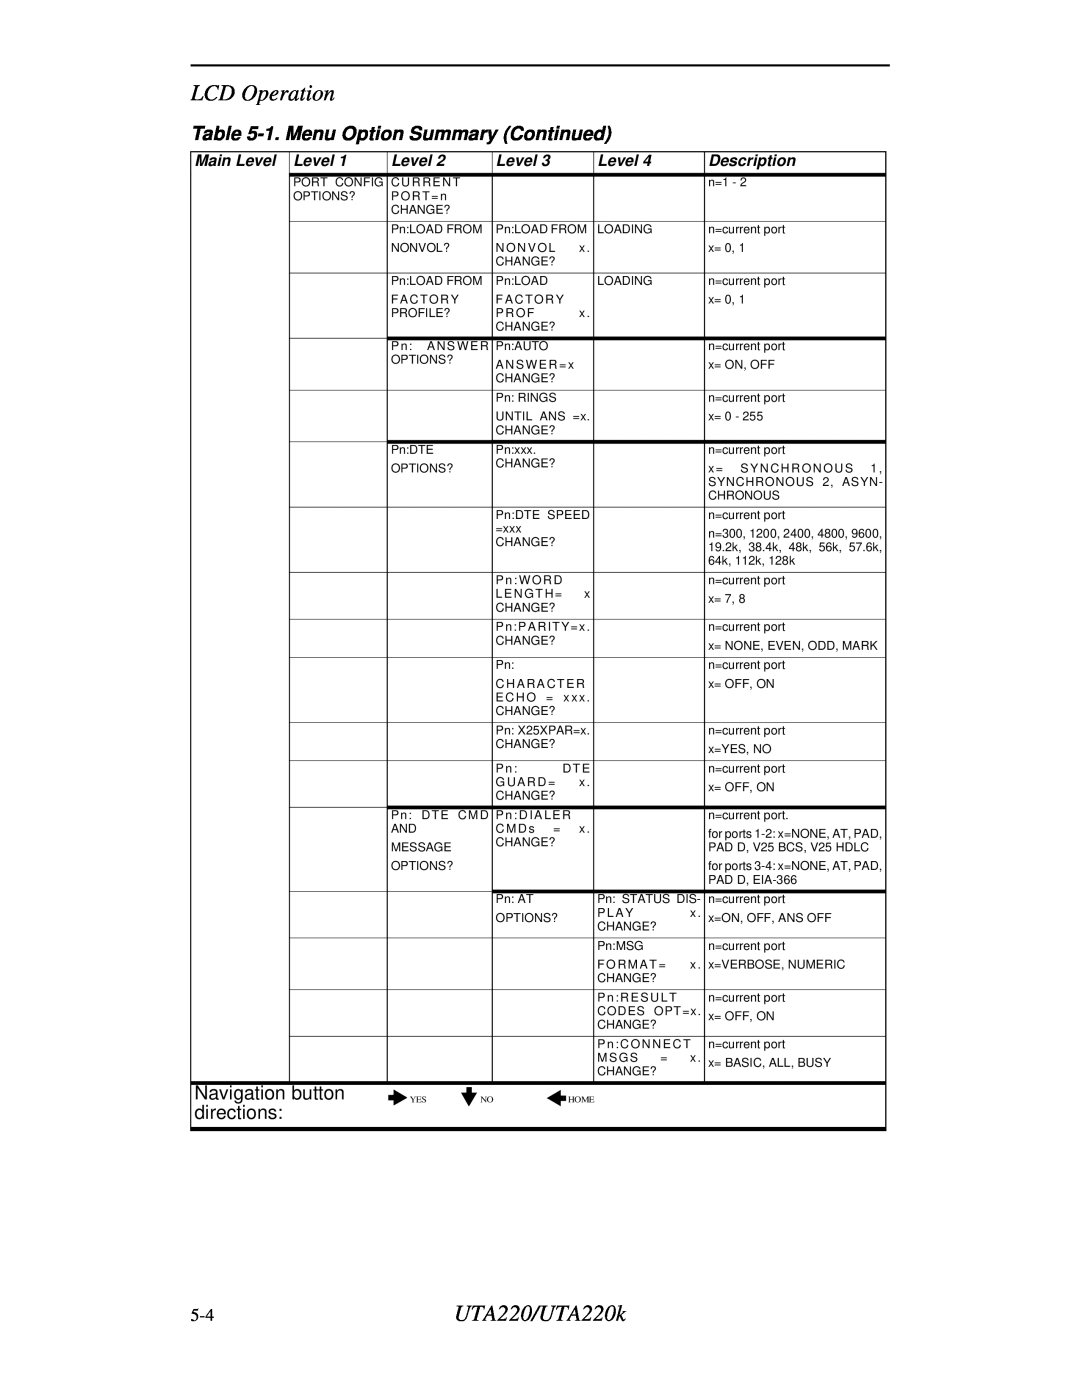 Northern UTA220/UTA220k manual LCD Operation, 1. Menu Option Summary Continued, Main Level, Description 